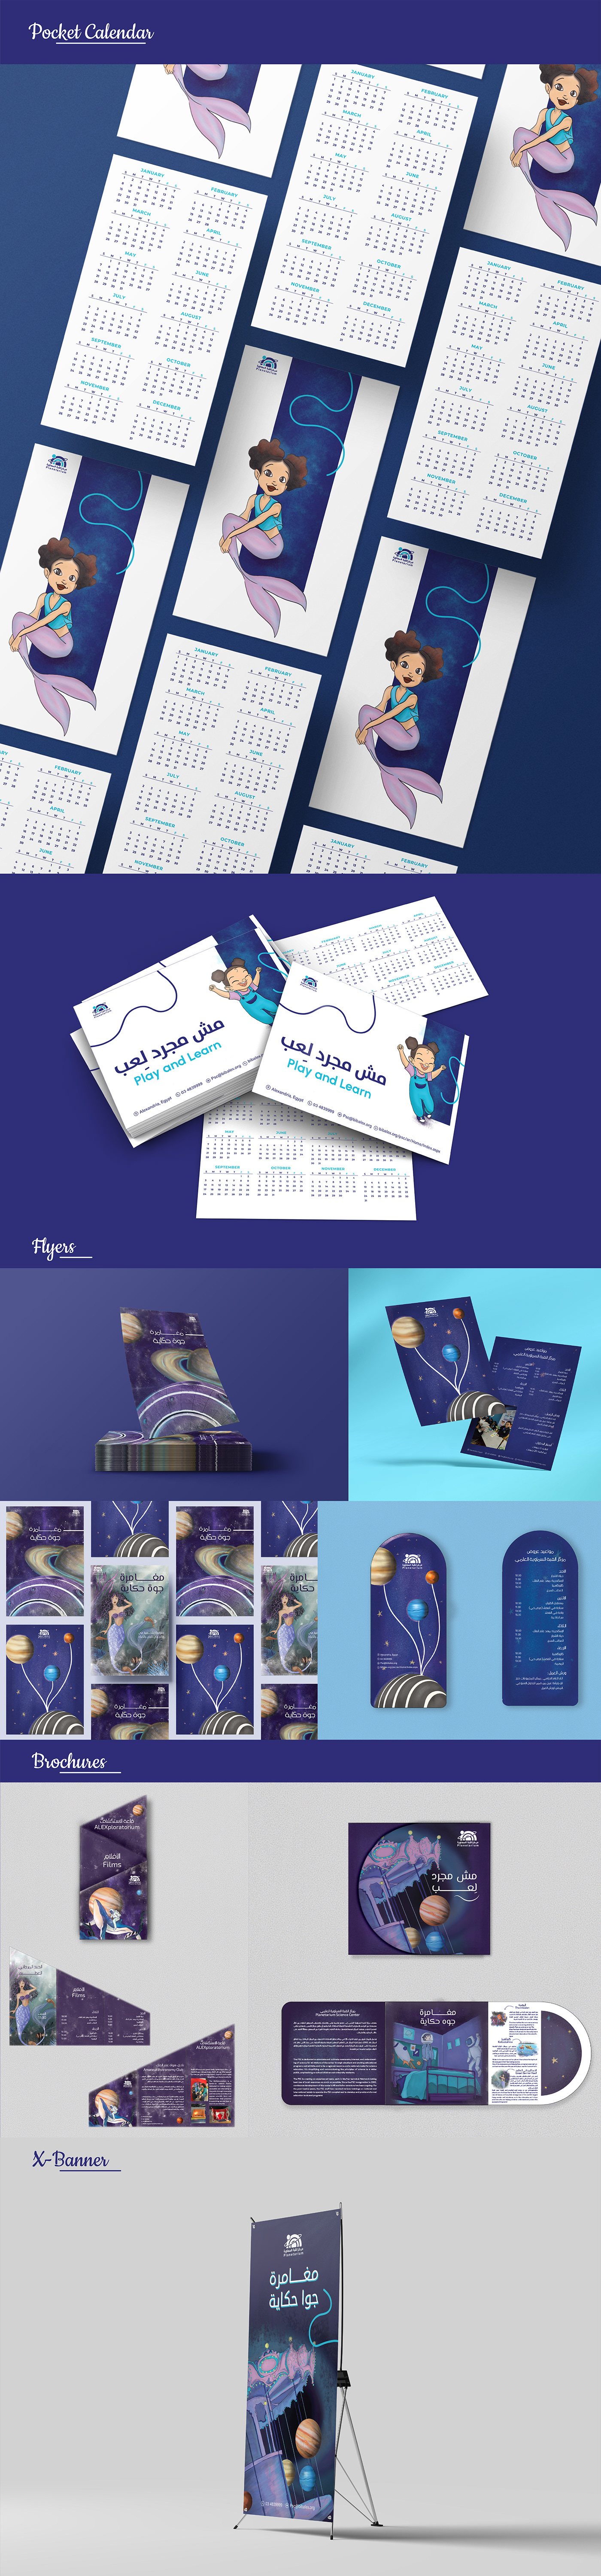 branding  Digital Art  Packaging ui design alexandria Signage Advertising  visual identity manipulation Kids illustrations